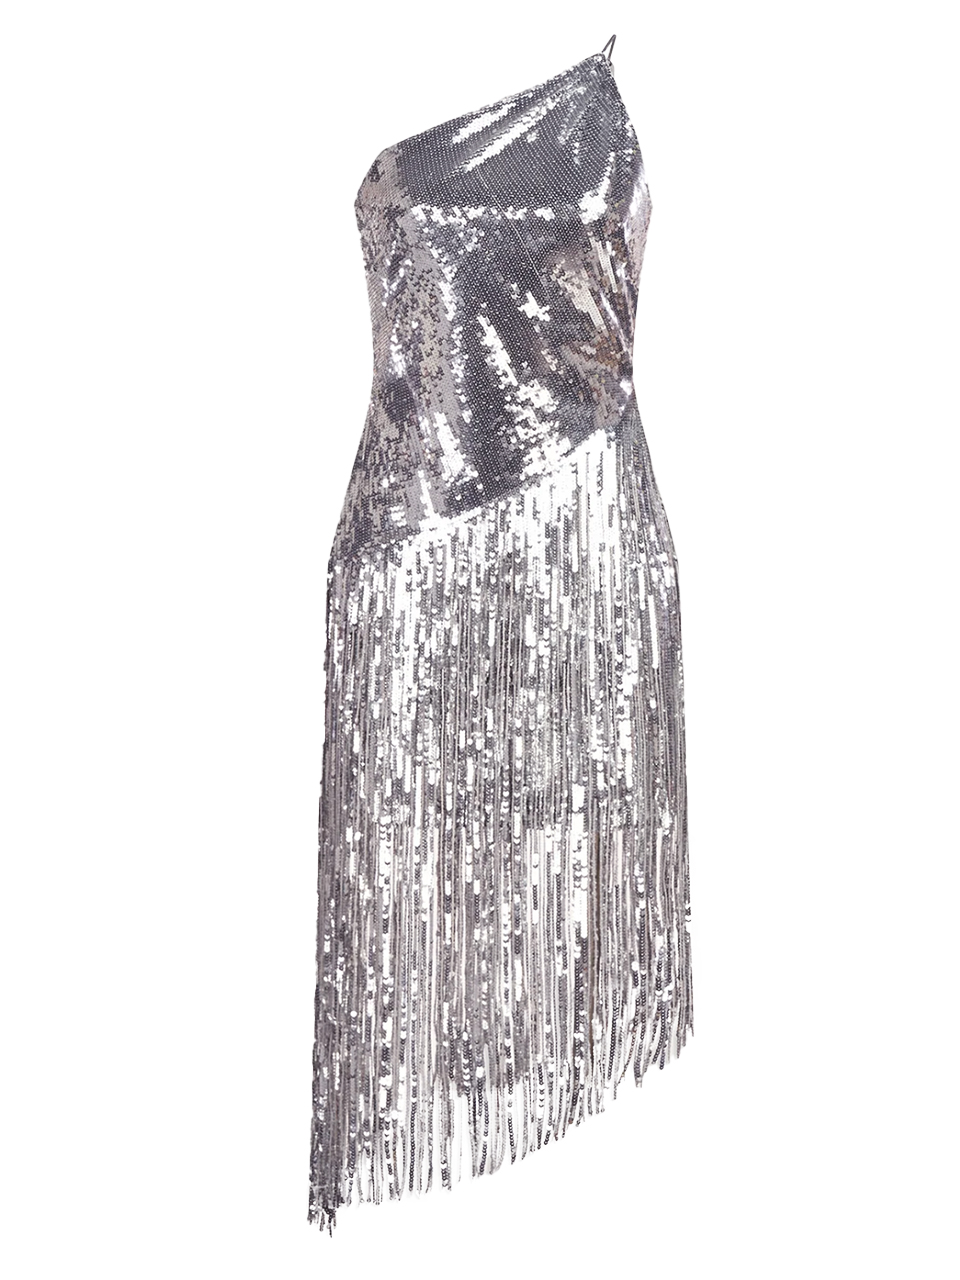 HALSTON Tonya Dress in Sequin Fringe Product Shot 